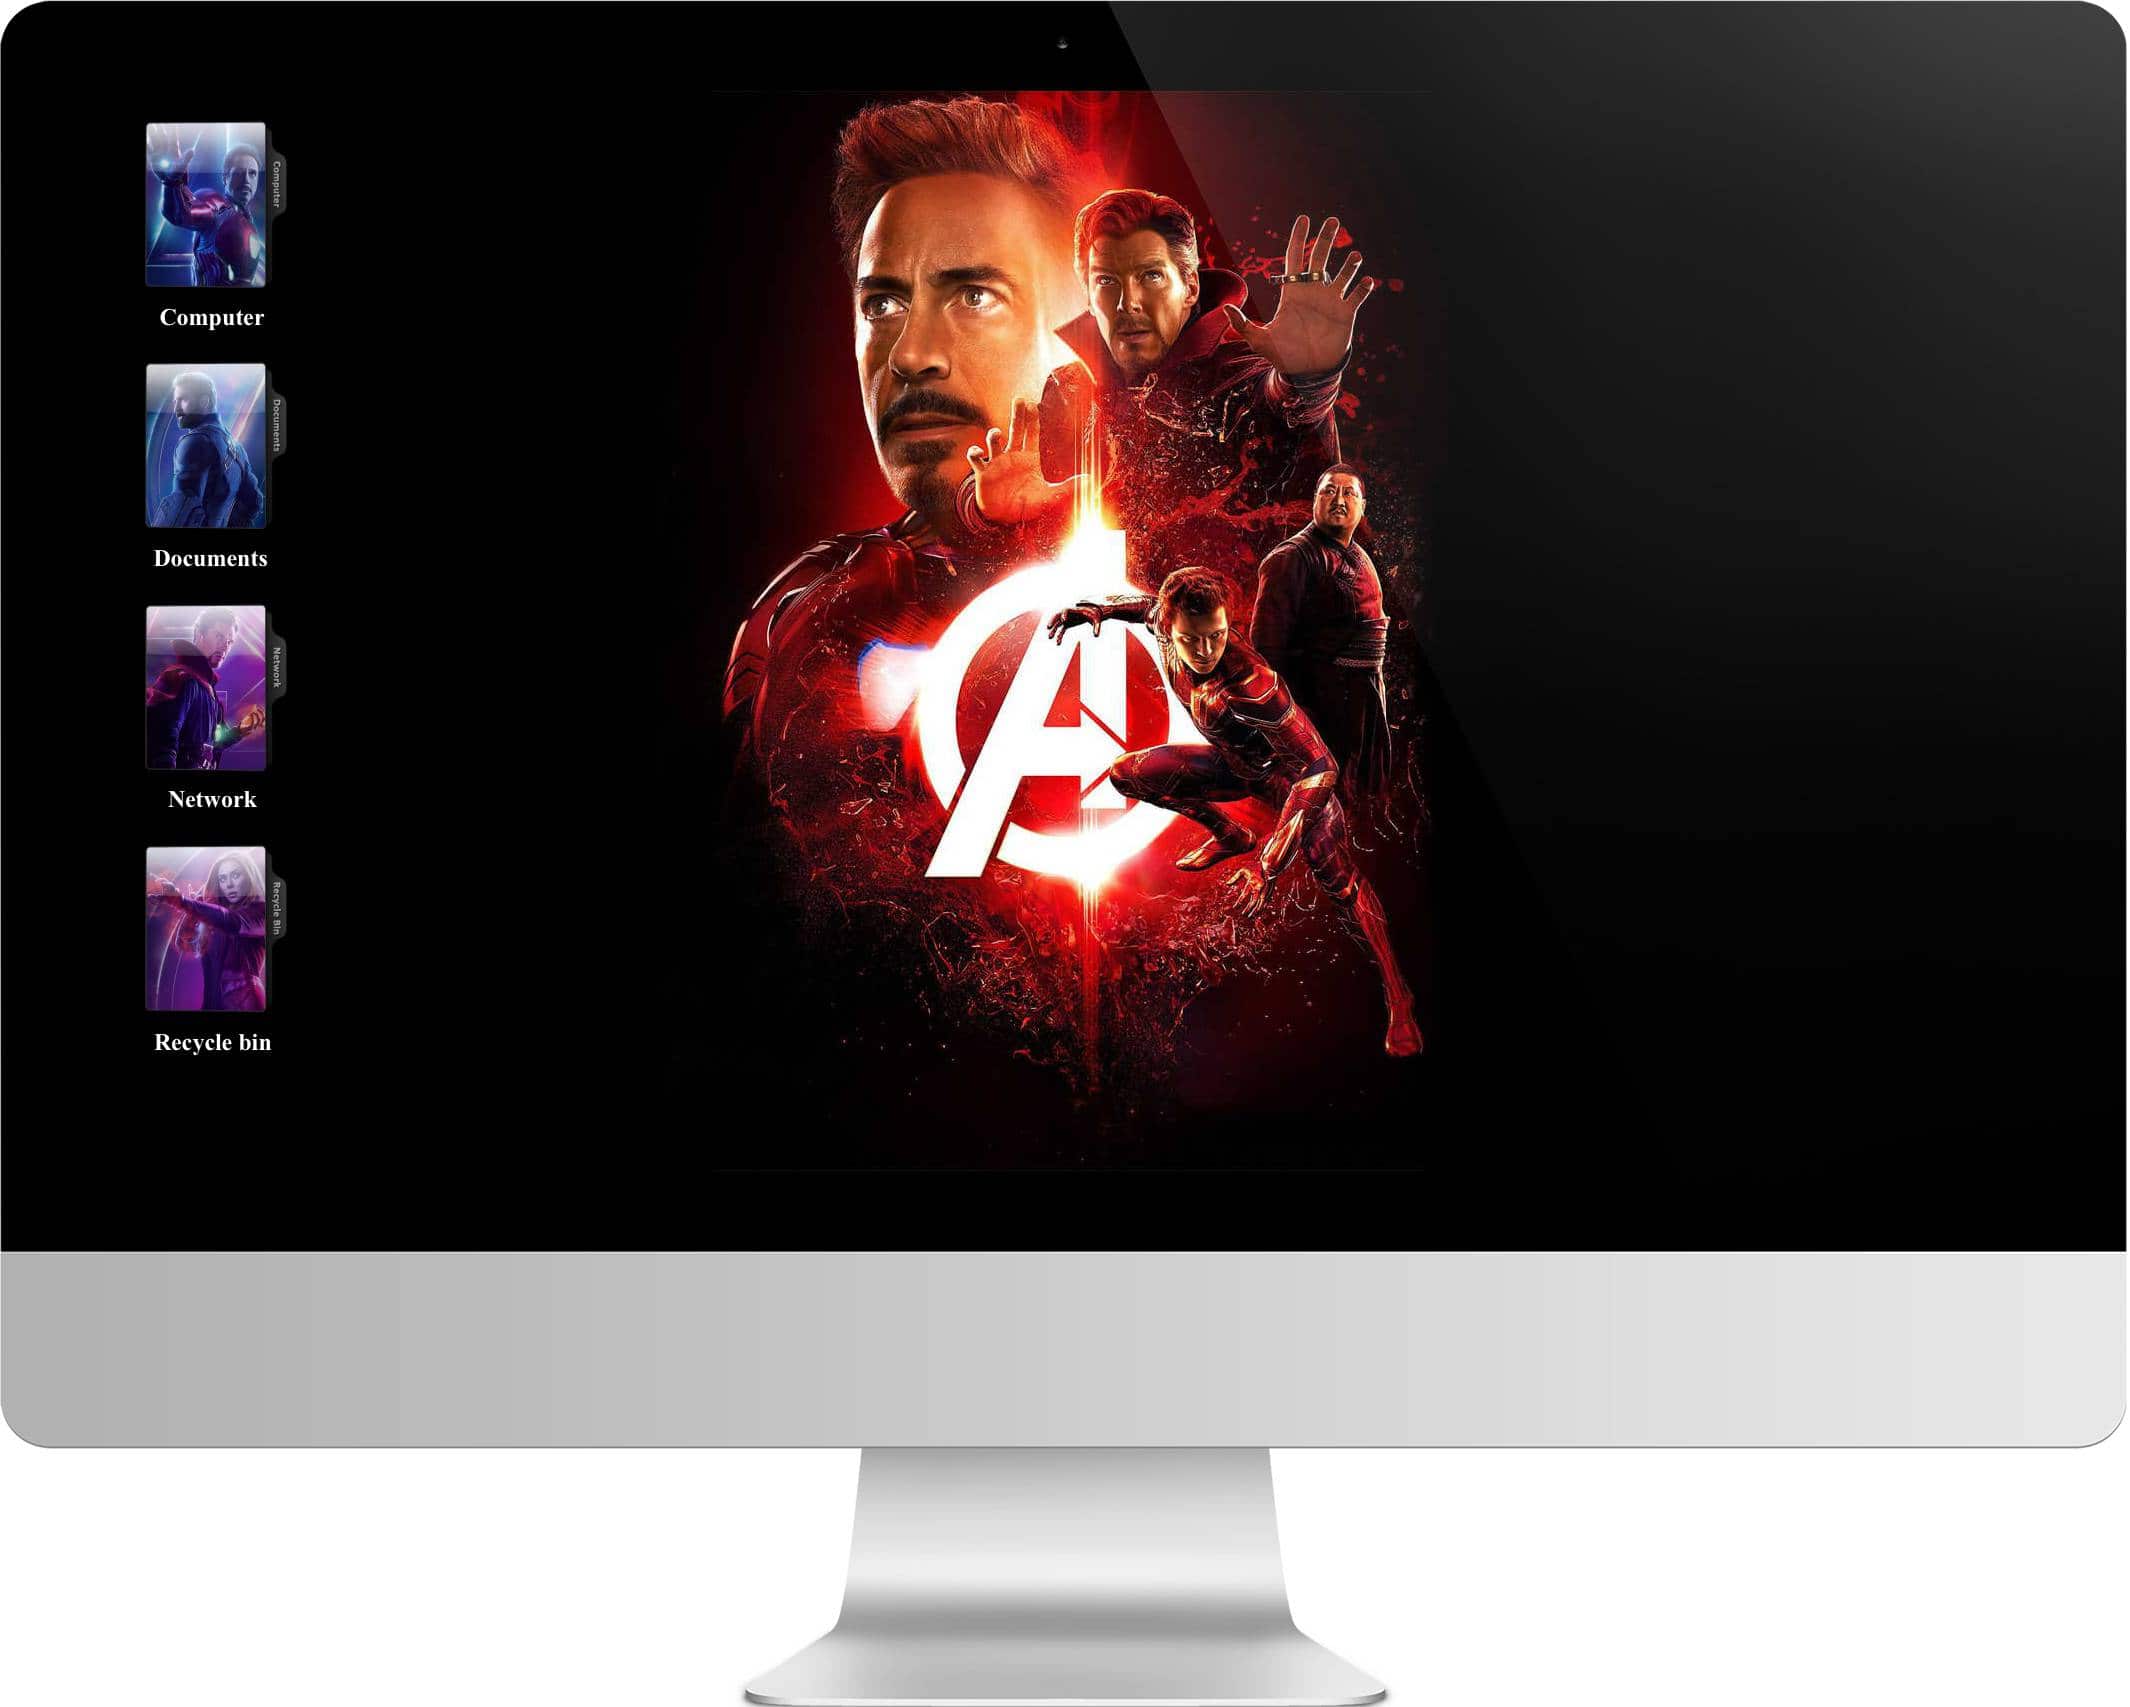 Endgame Windows 10 Theme - Infinity War Tony Stark , HD Wallpaper & Backgrounds